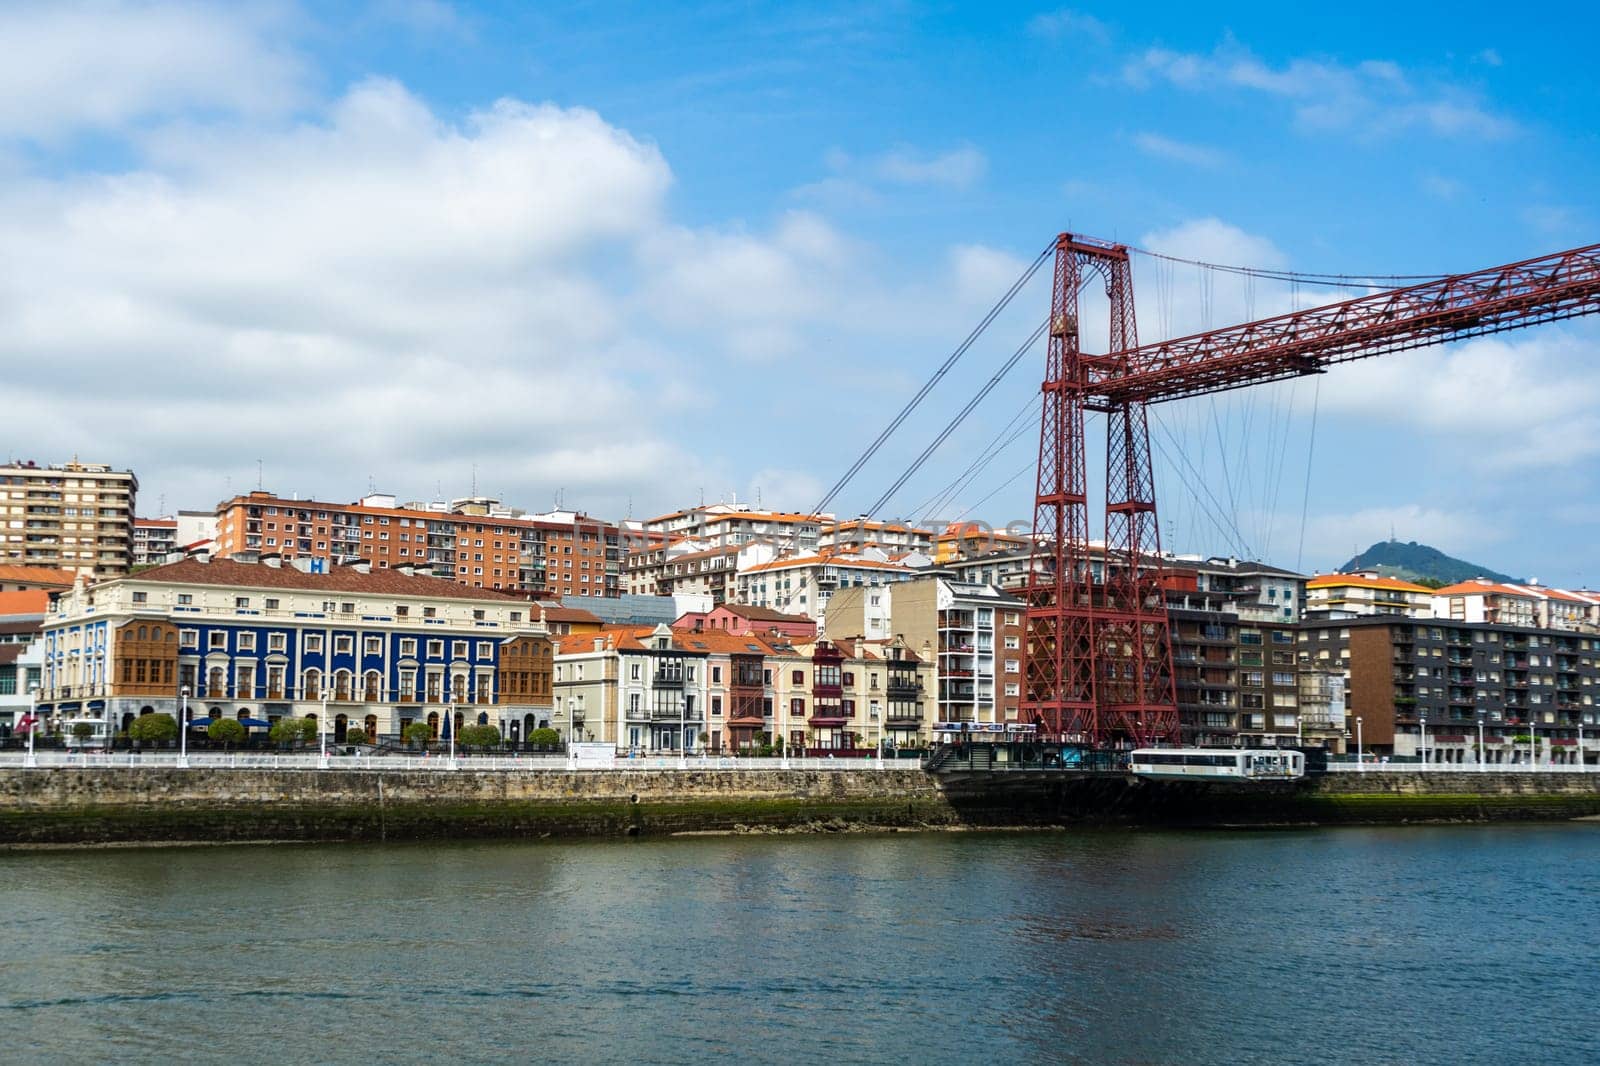 Portugalete, Spain - 12.06.2022: The Bizkaia suspension transporter bridge Puente de Vizcaya in Portugalete, Basque Country, Spain